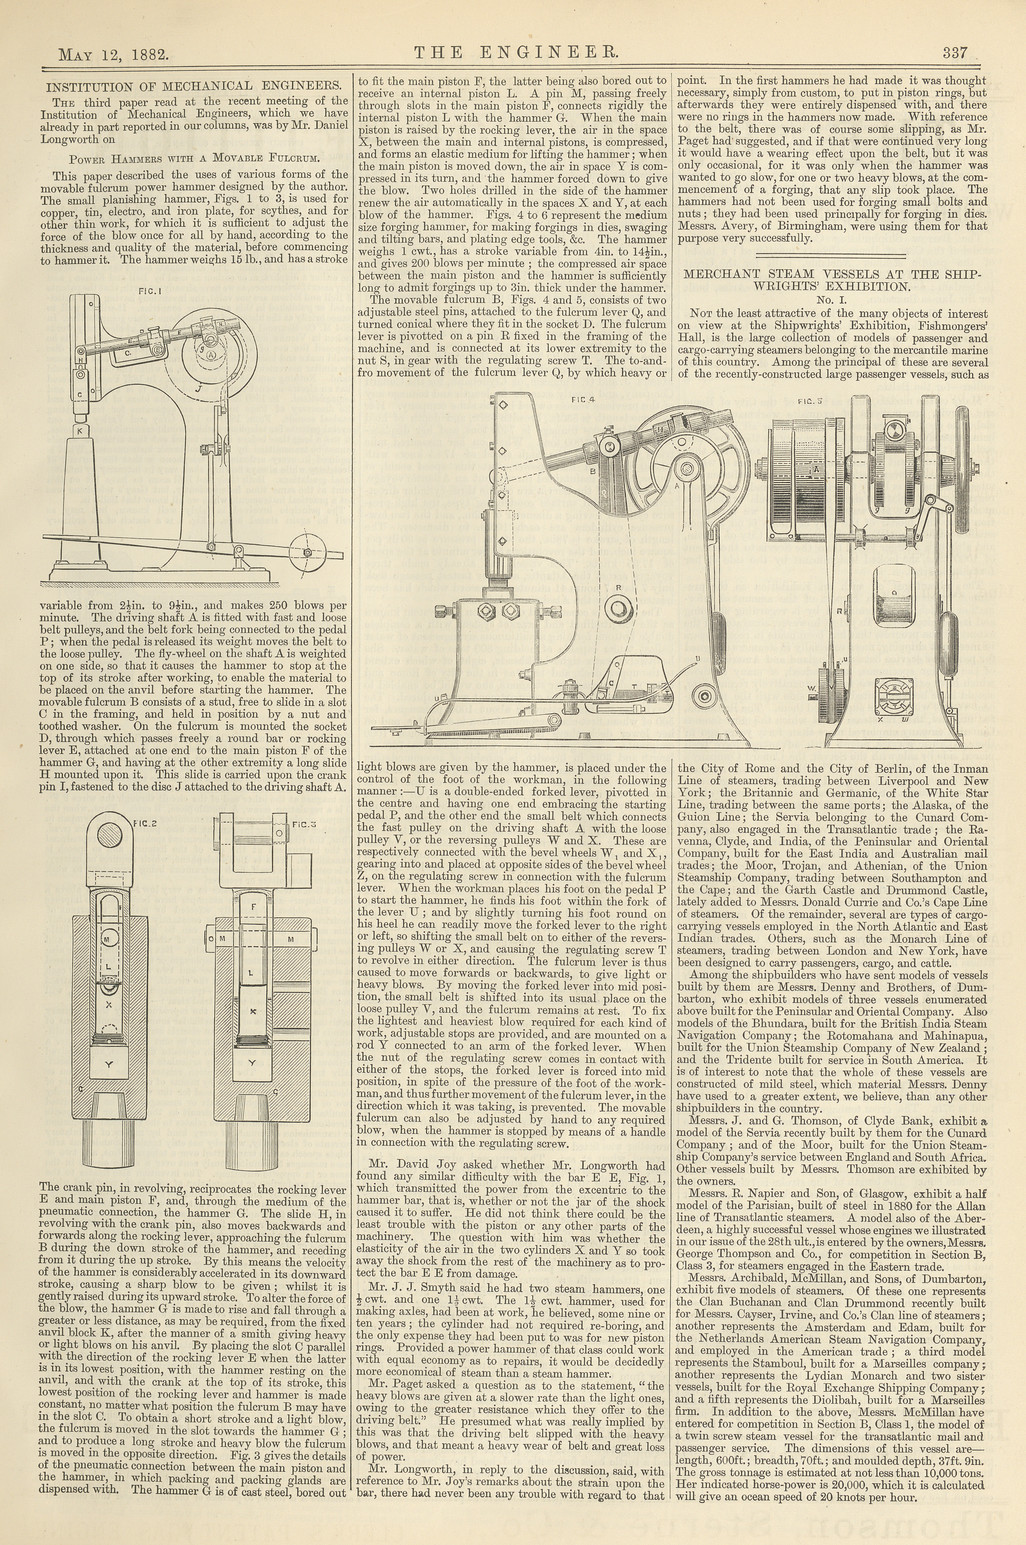 The Engineer, Vol.53, 12 May